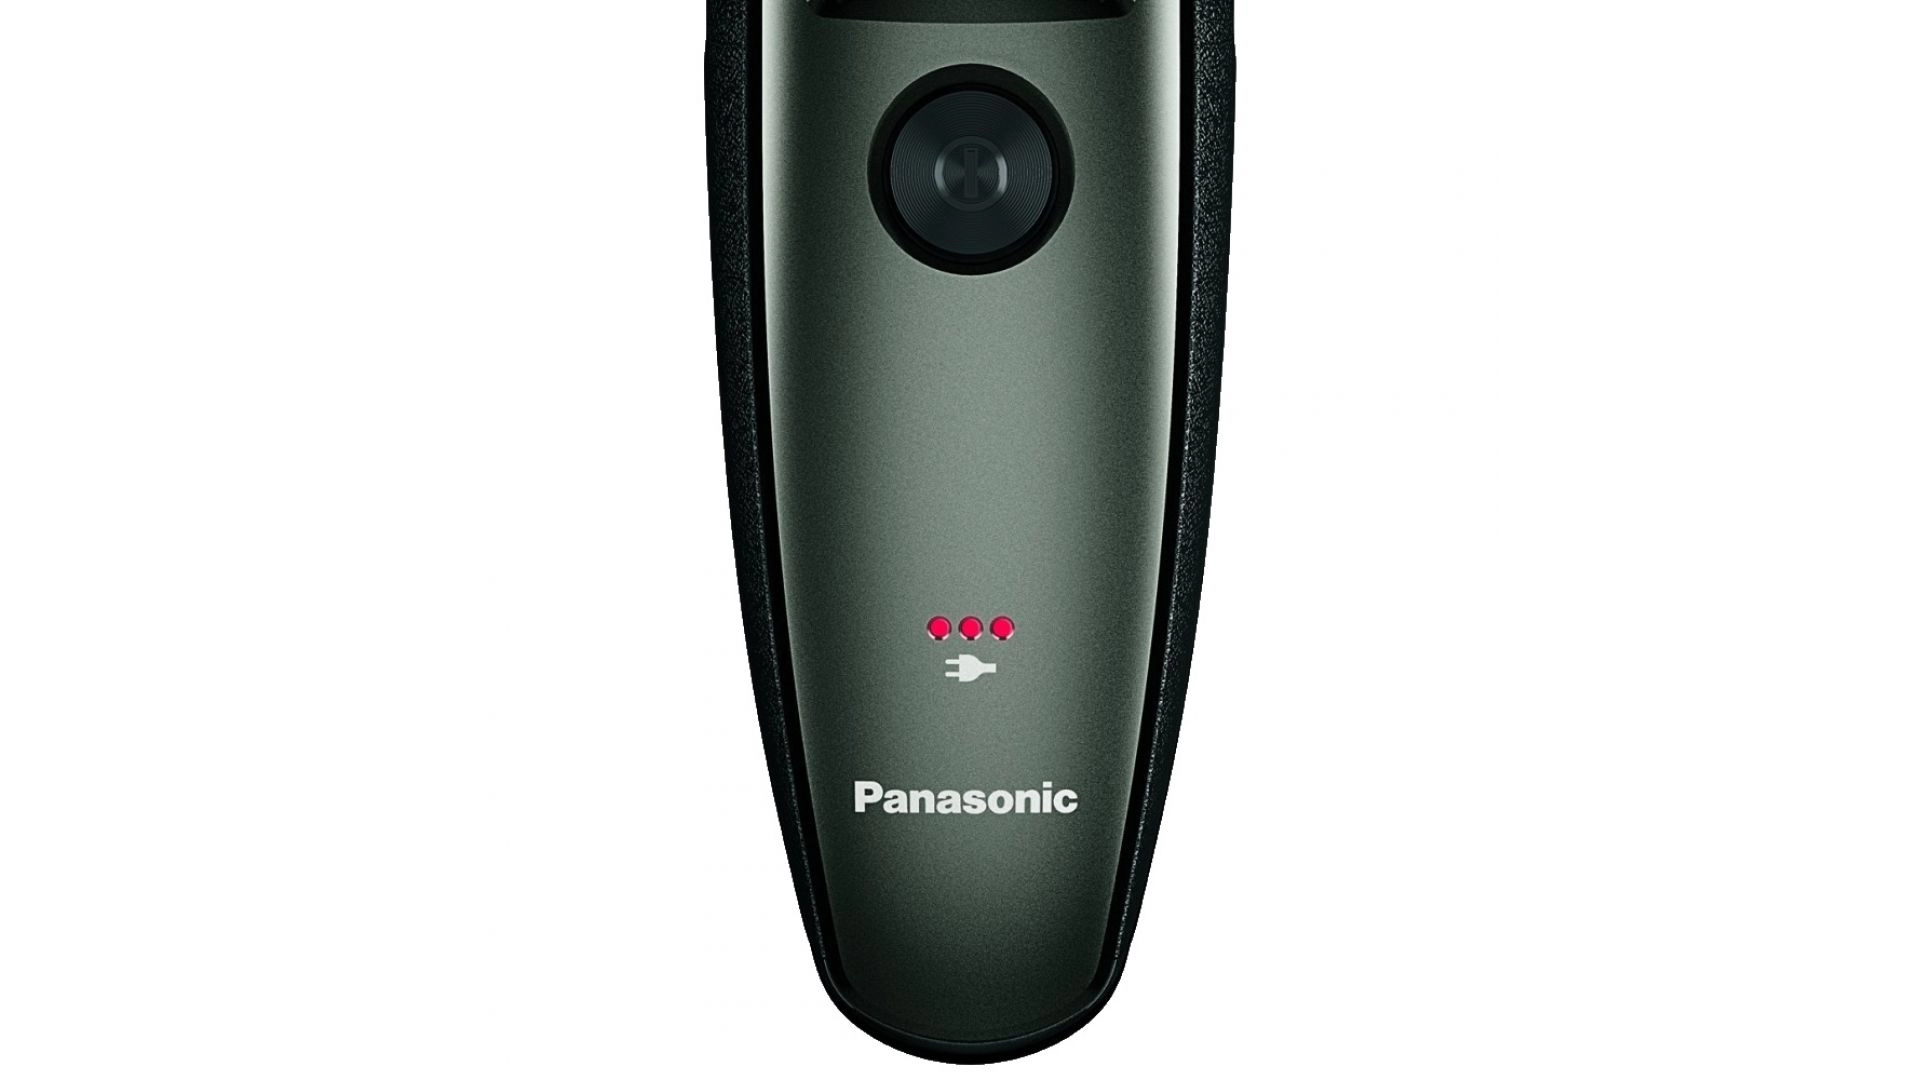 Машинка для стрижки Panasonic ER-GB60K520